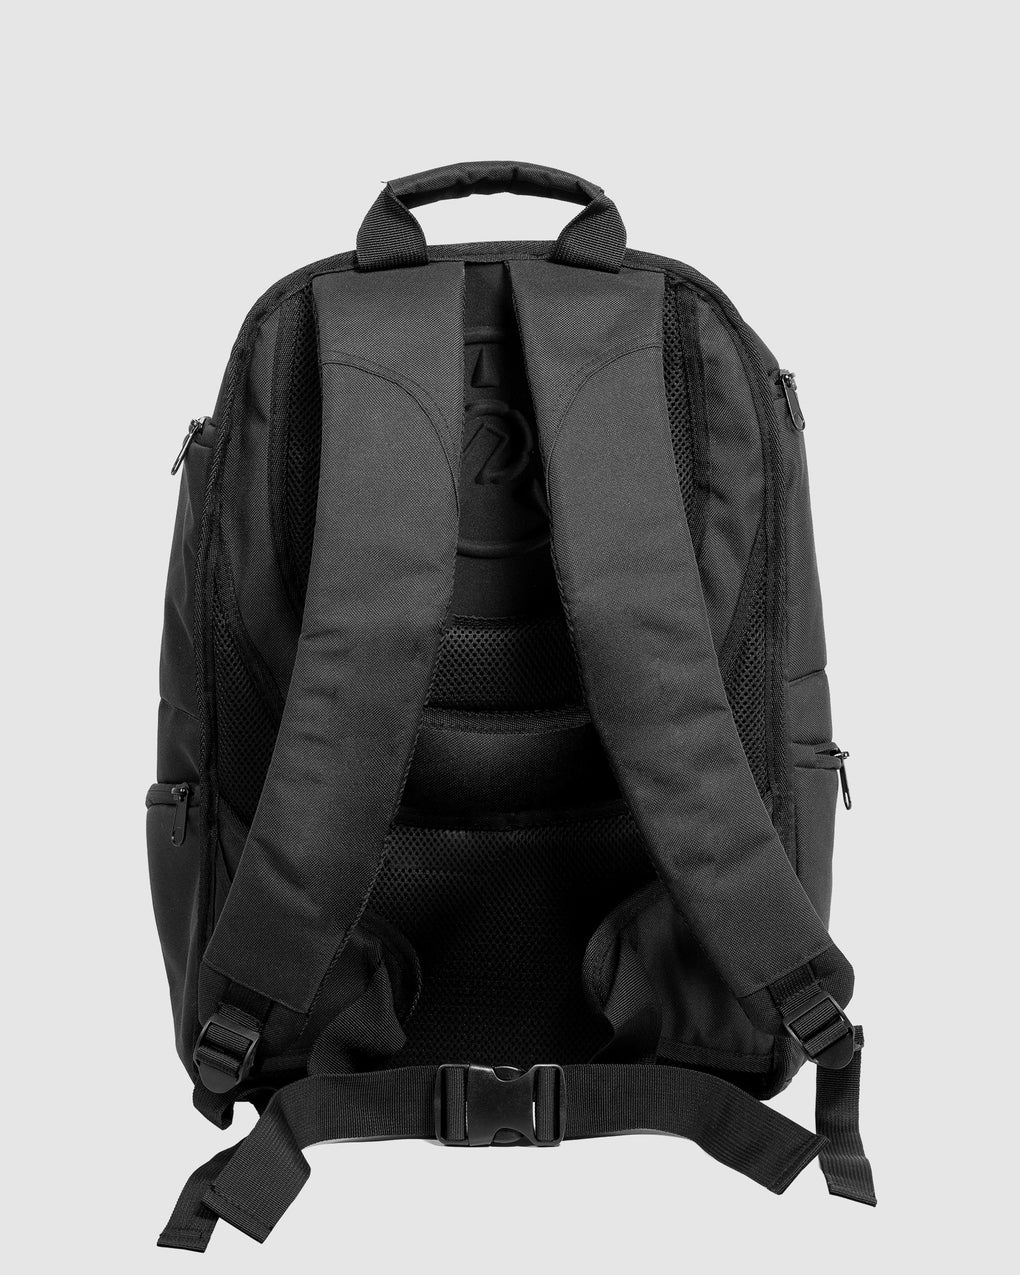 UNIT Comanche V3 Premium Backpack 27L